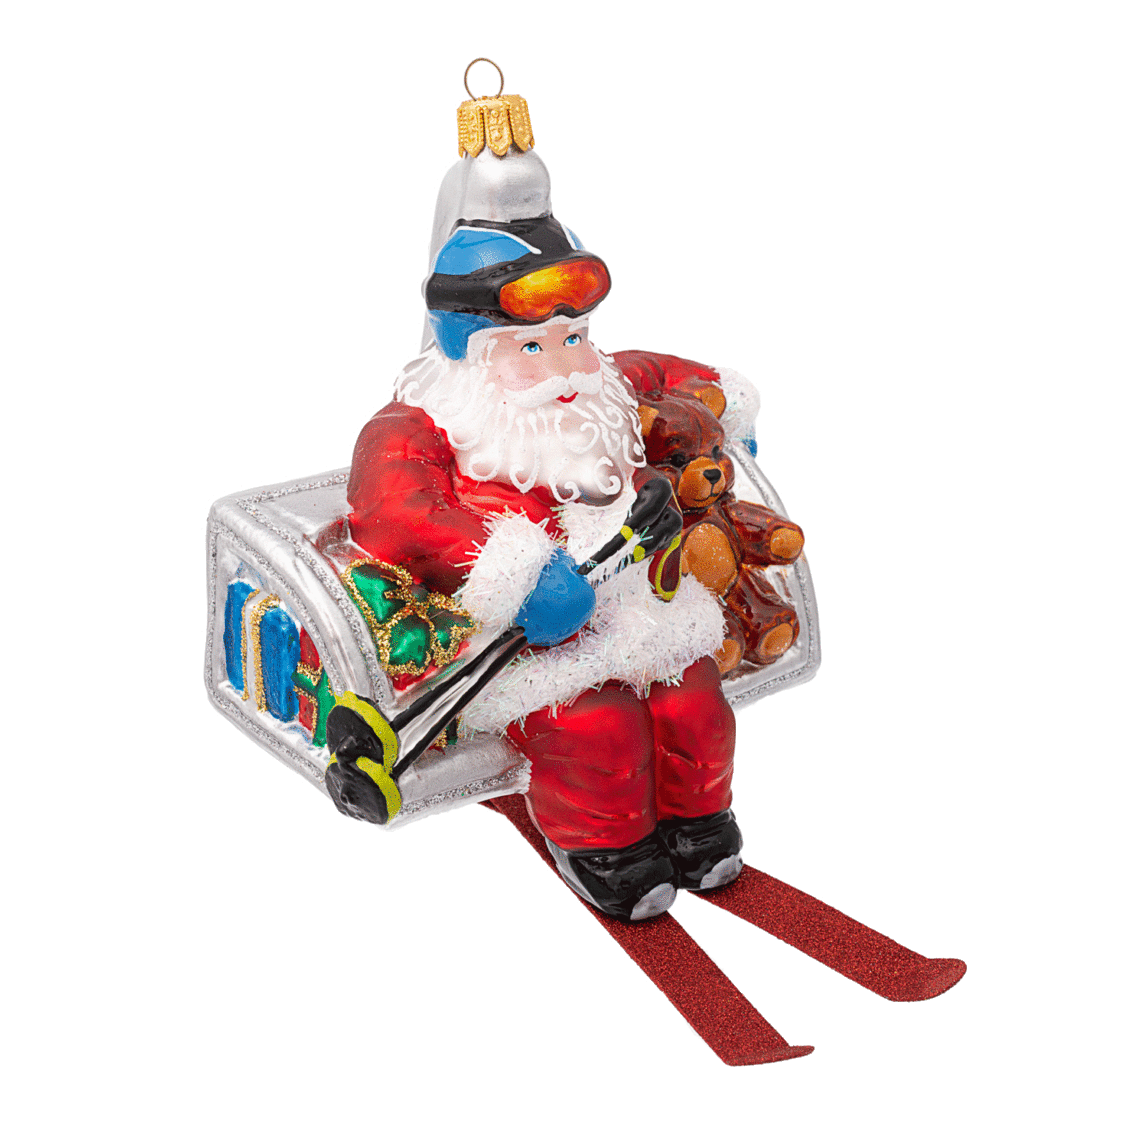 Viv! Home Luxuries Kerstornament - Kerstman skilift - mond geblazen glas - rood blauw - 10cm - Viv! Home Luxuries